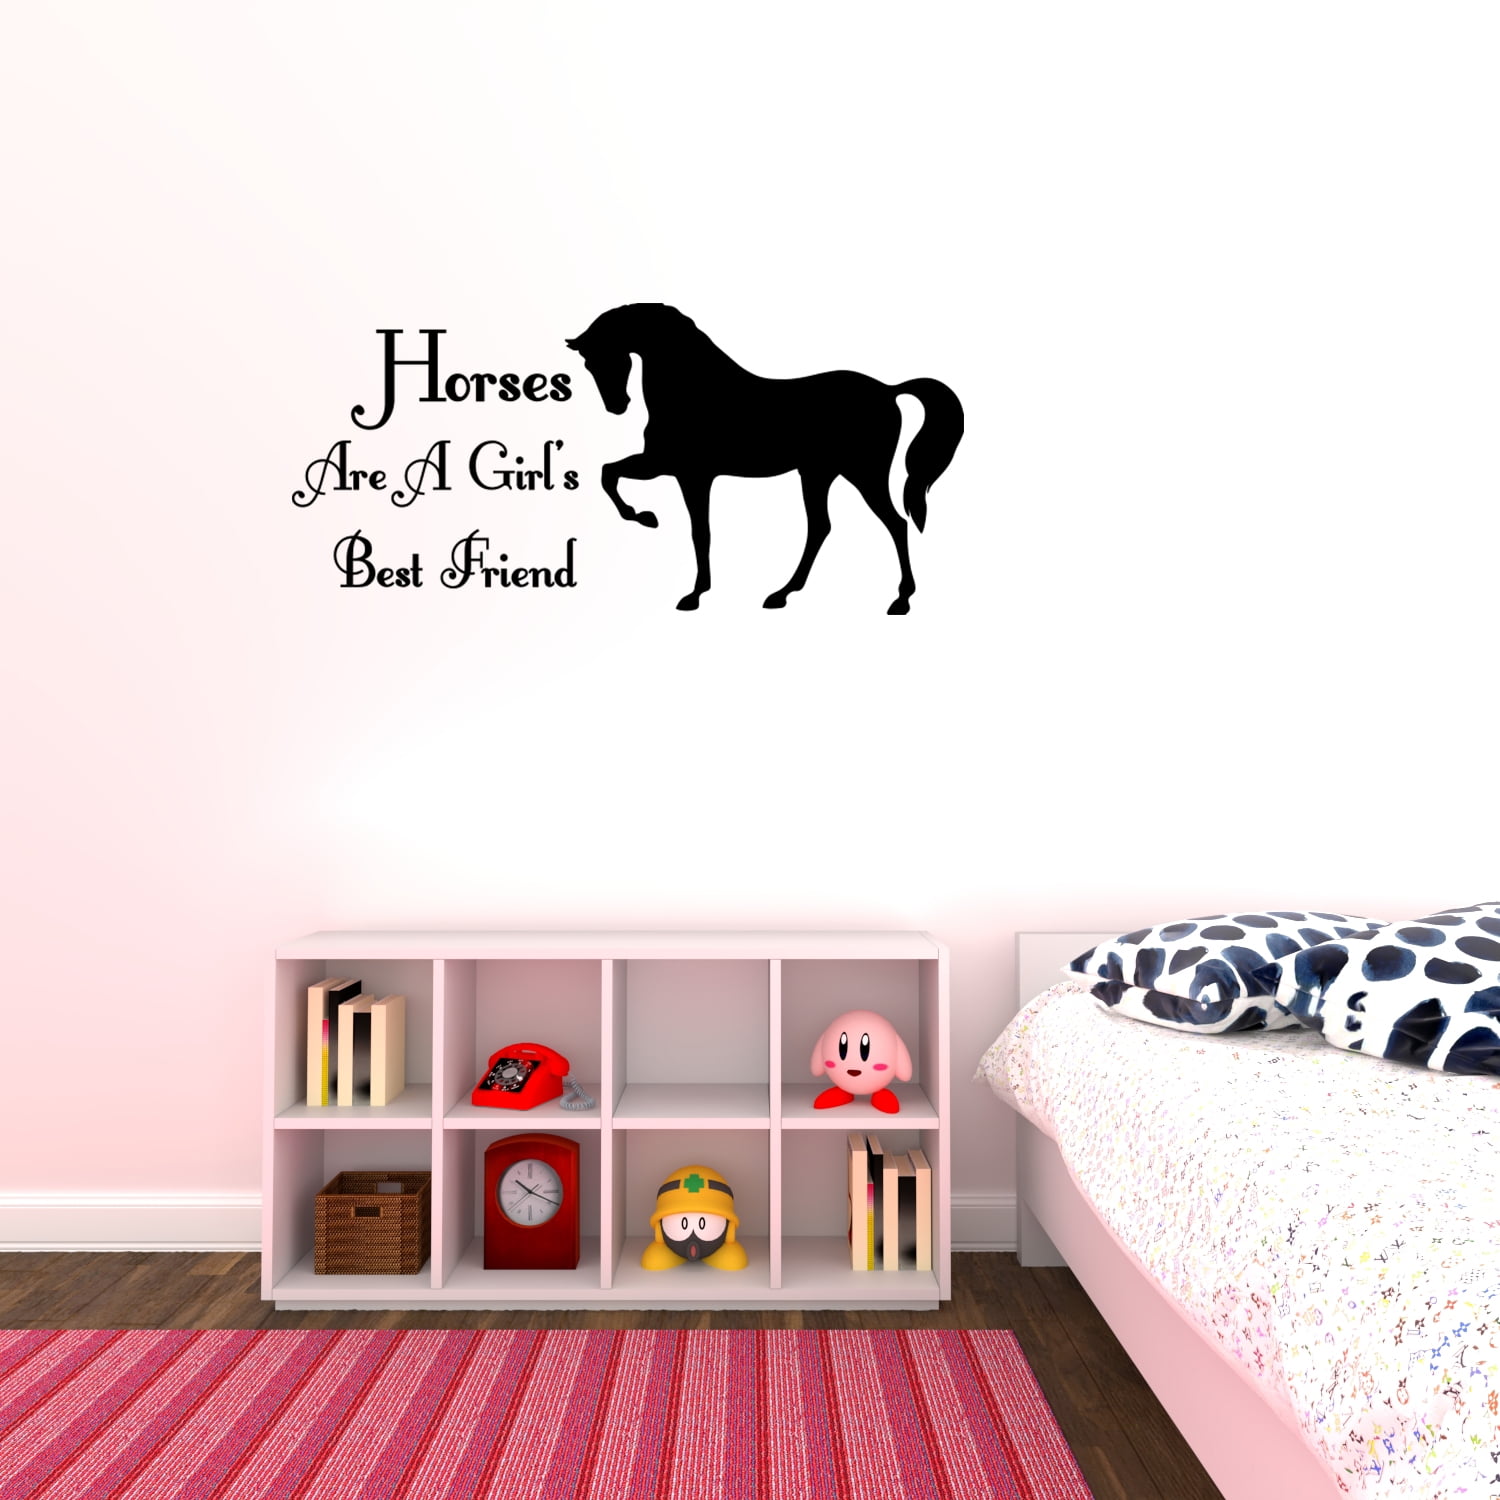 Details about   Wood Horse Cowboy Cute Animal Home Kids Room Wall Sticker Vinyl Art Decals Decor